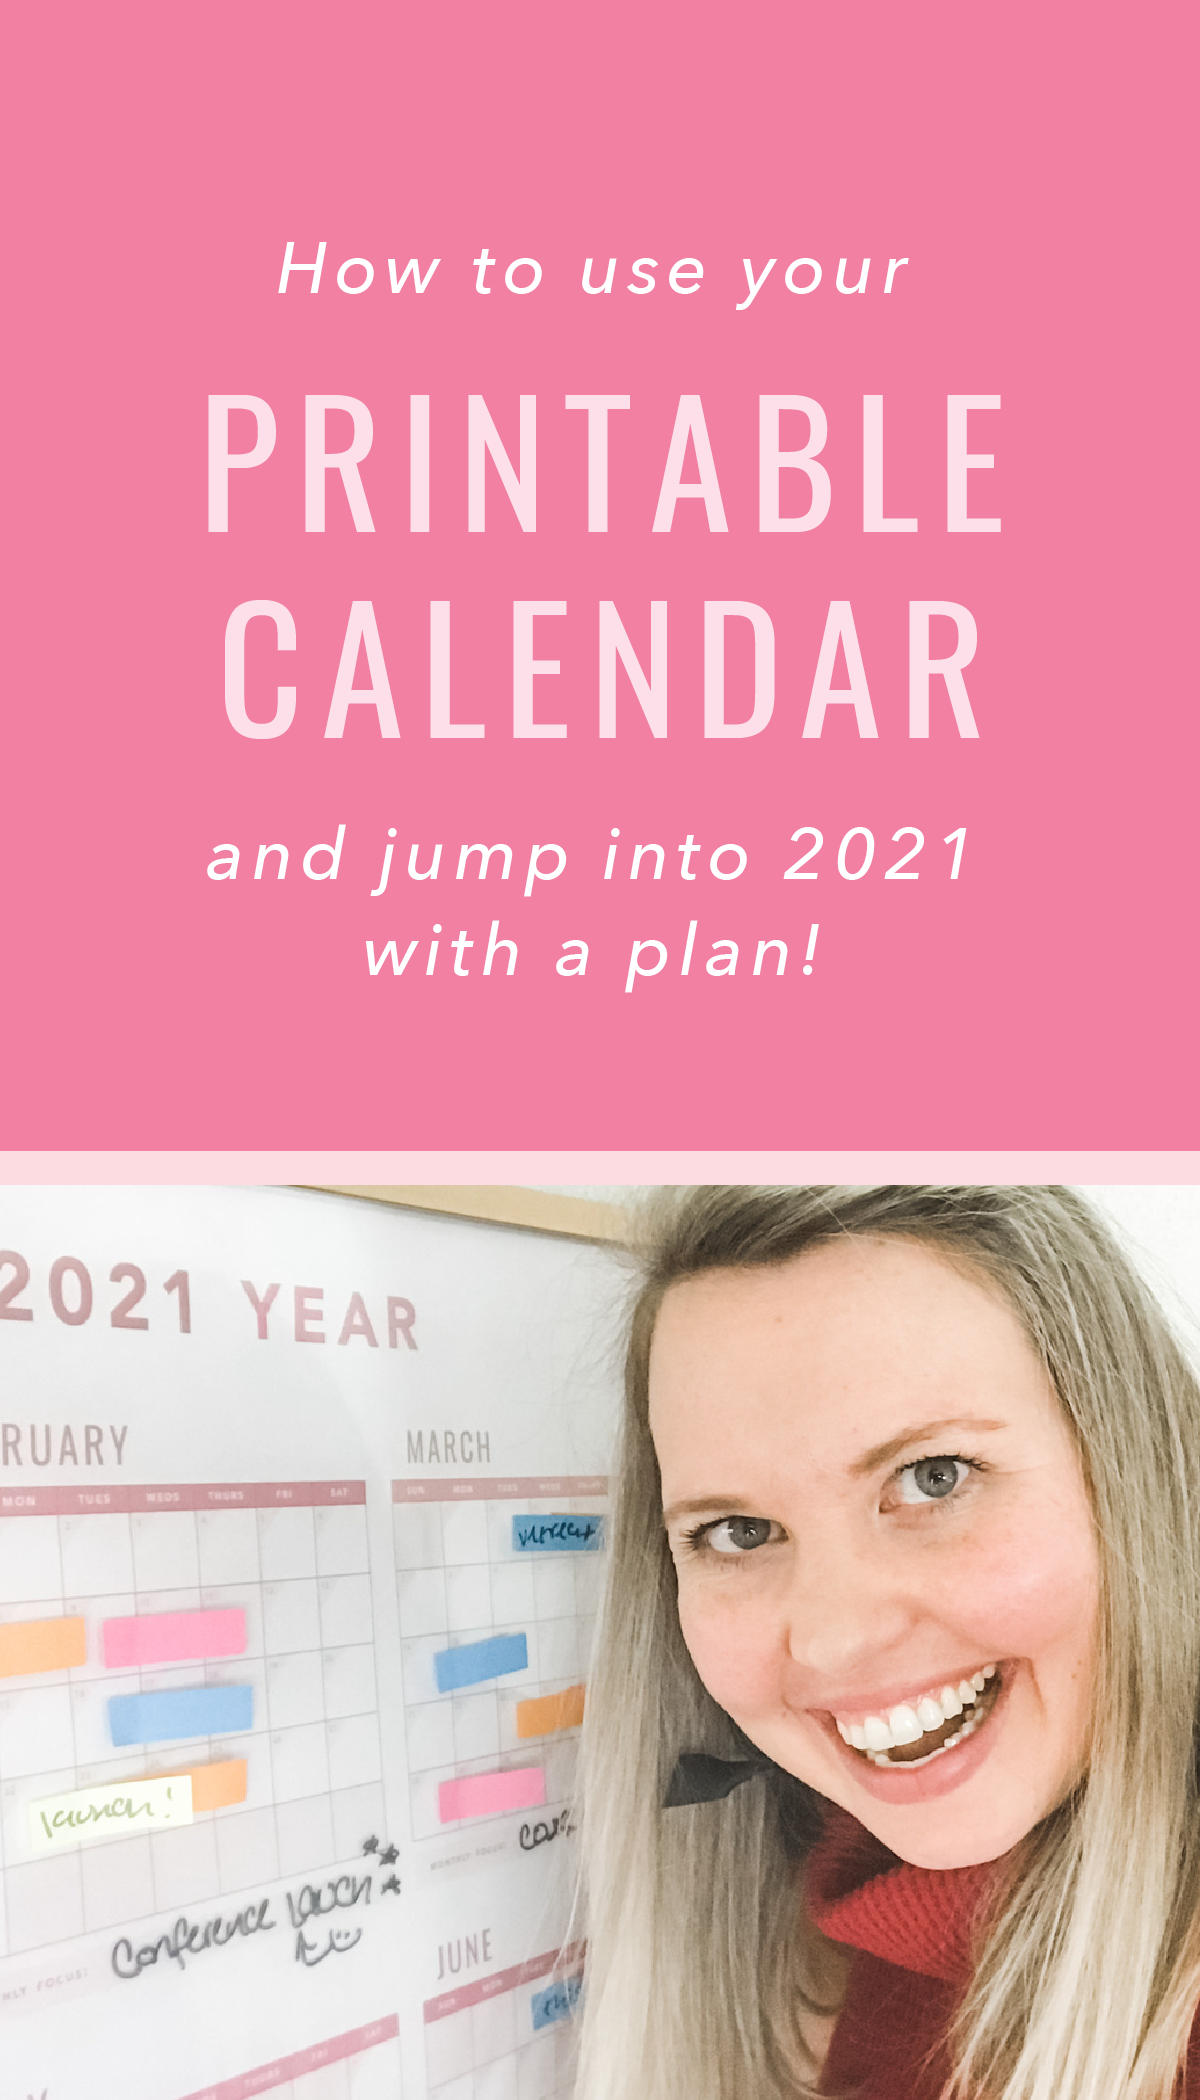 How to Use Your Printable Calendar // Creative at Heart #endofyear #printablecalendar #2020 #2021 #annualplanning